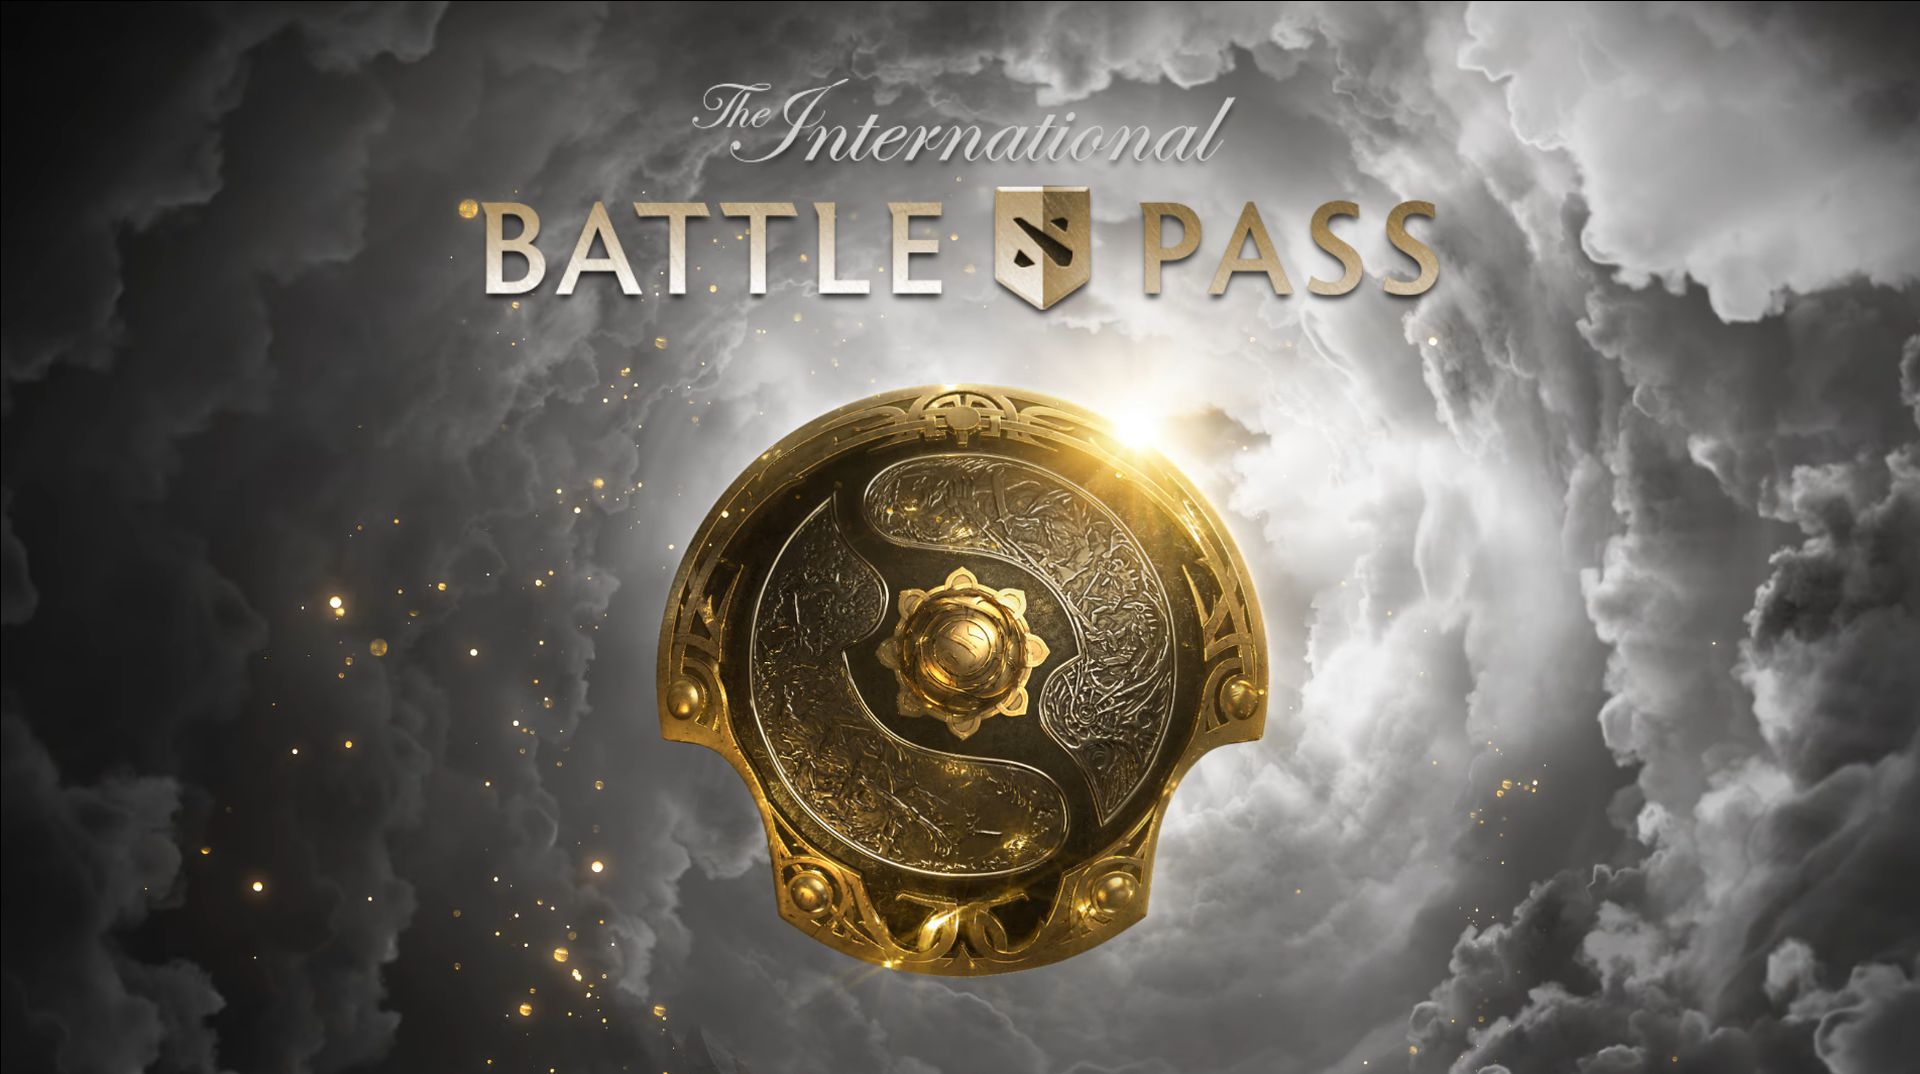 Dota 2 - The International Battle Pass 2020